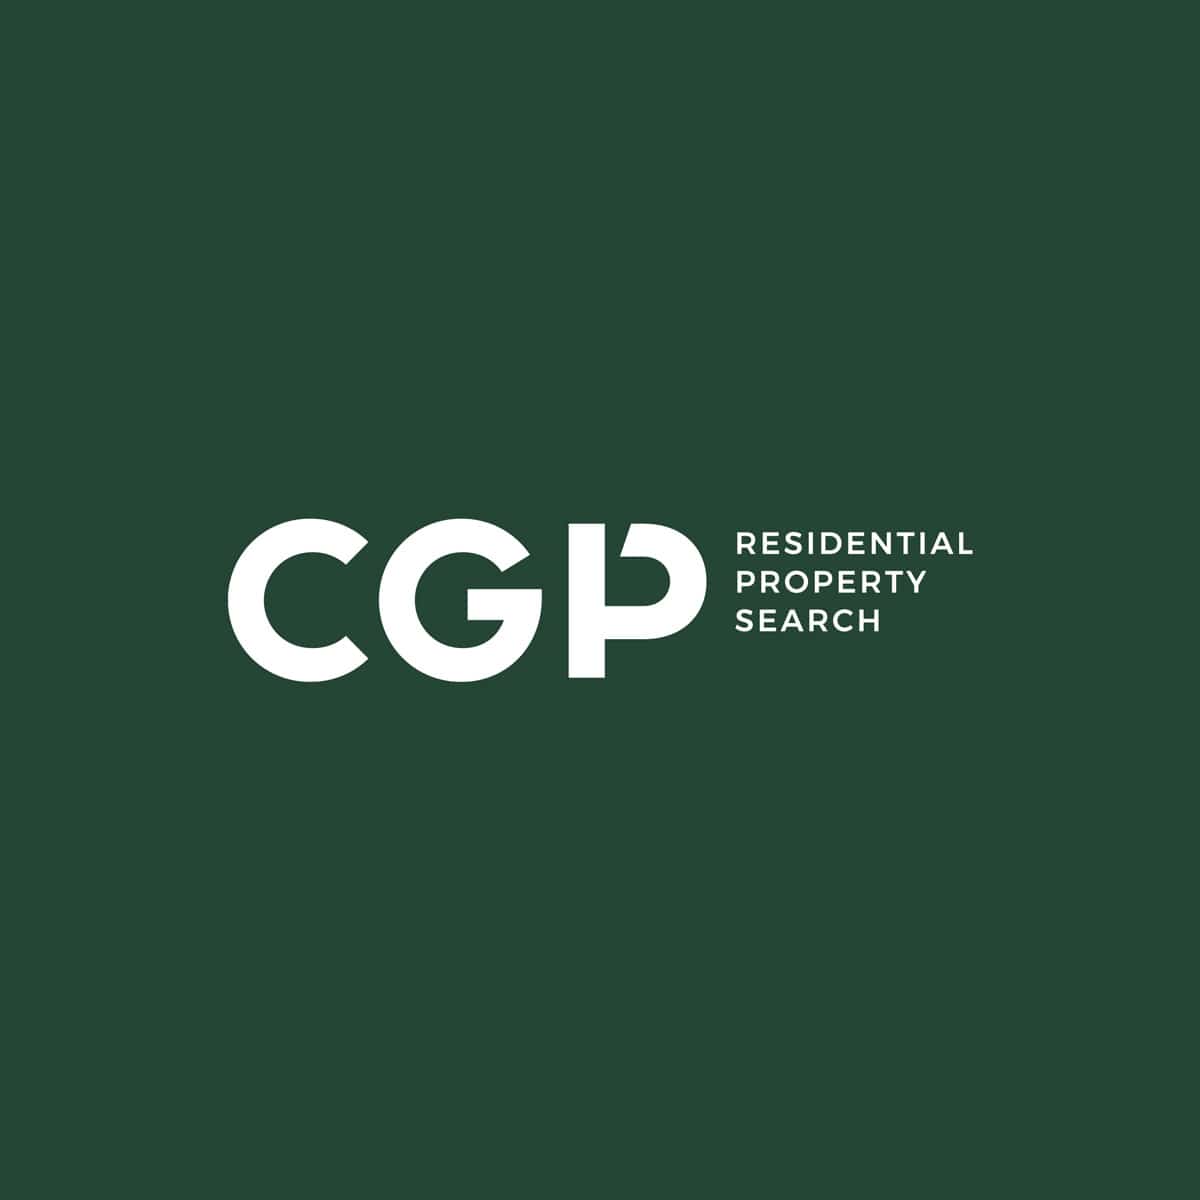 CGP property agent rebrand